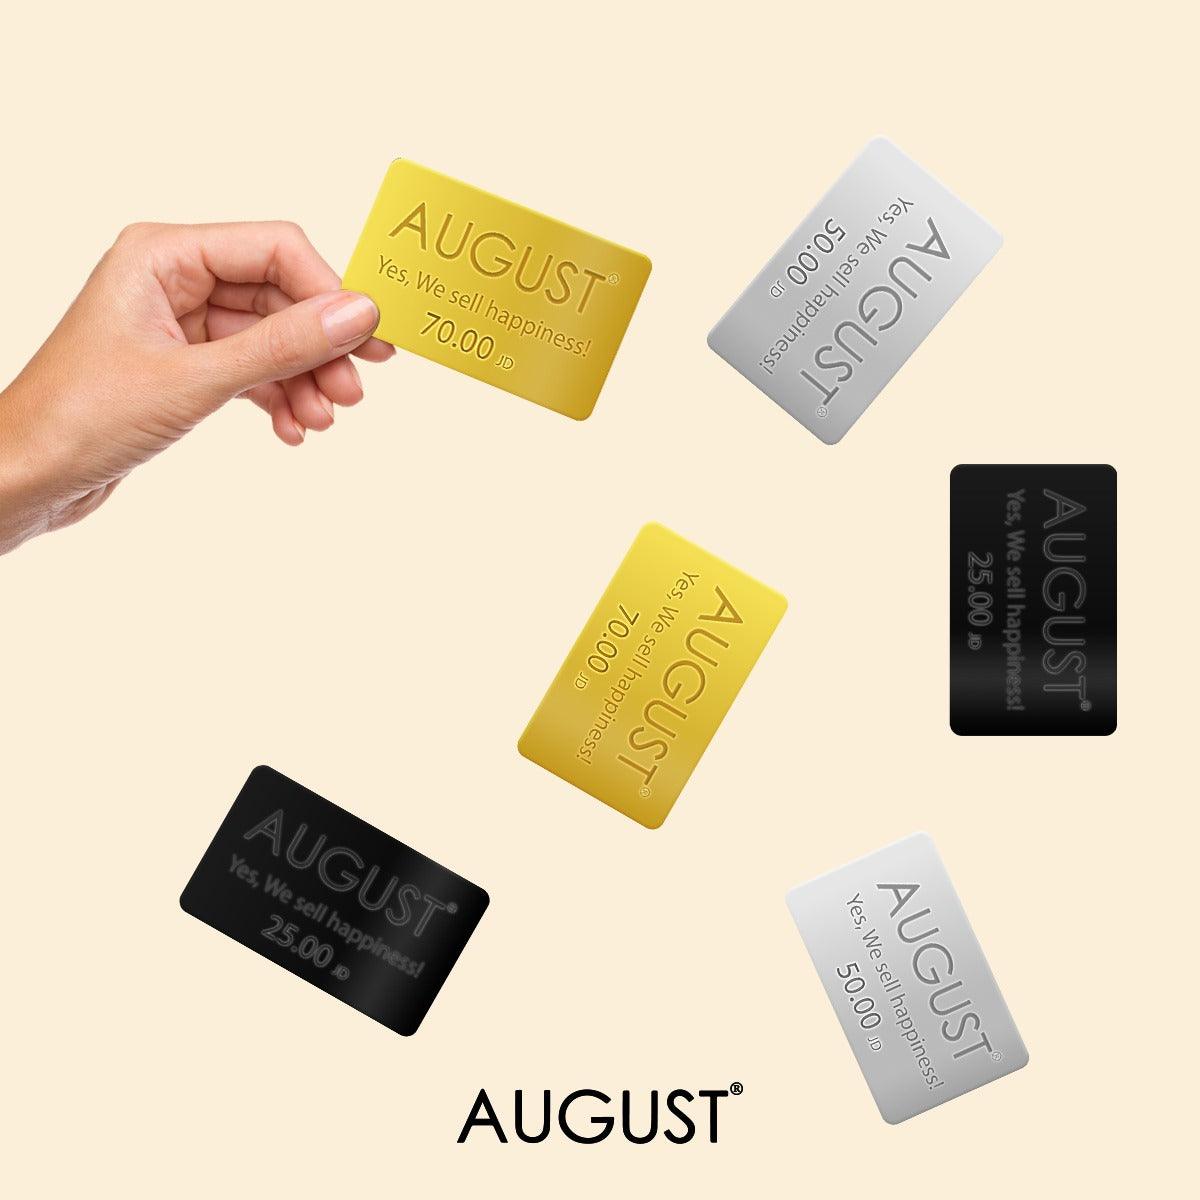 prepaid debit card loaded with 50.00 JOD . - augustshoes